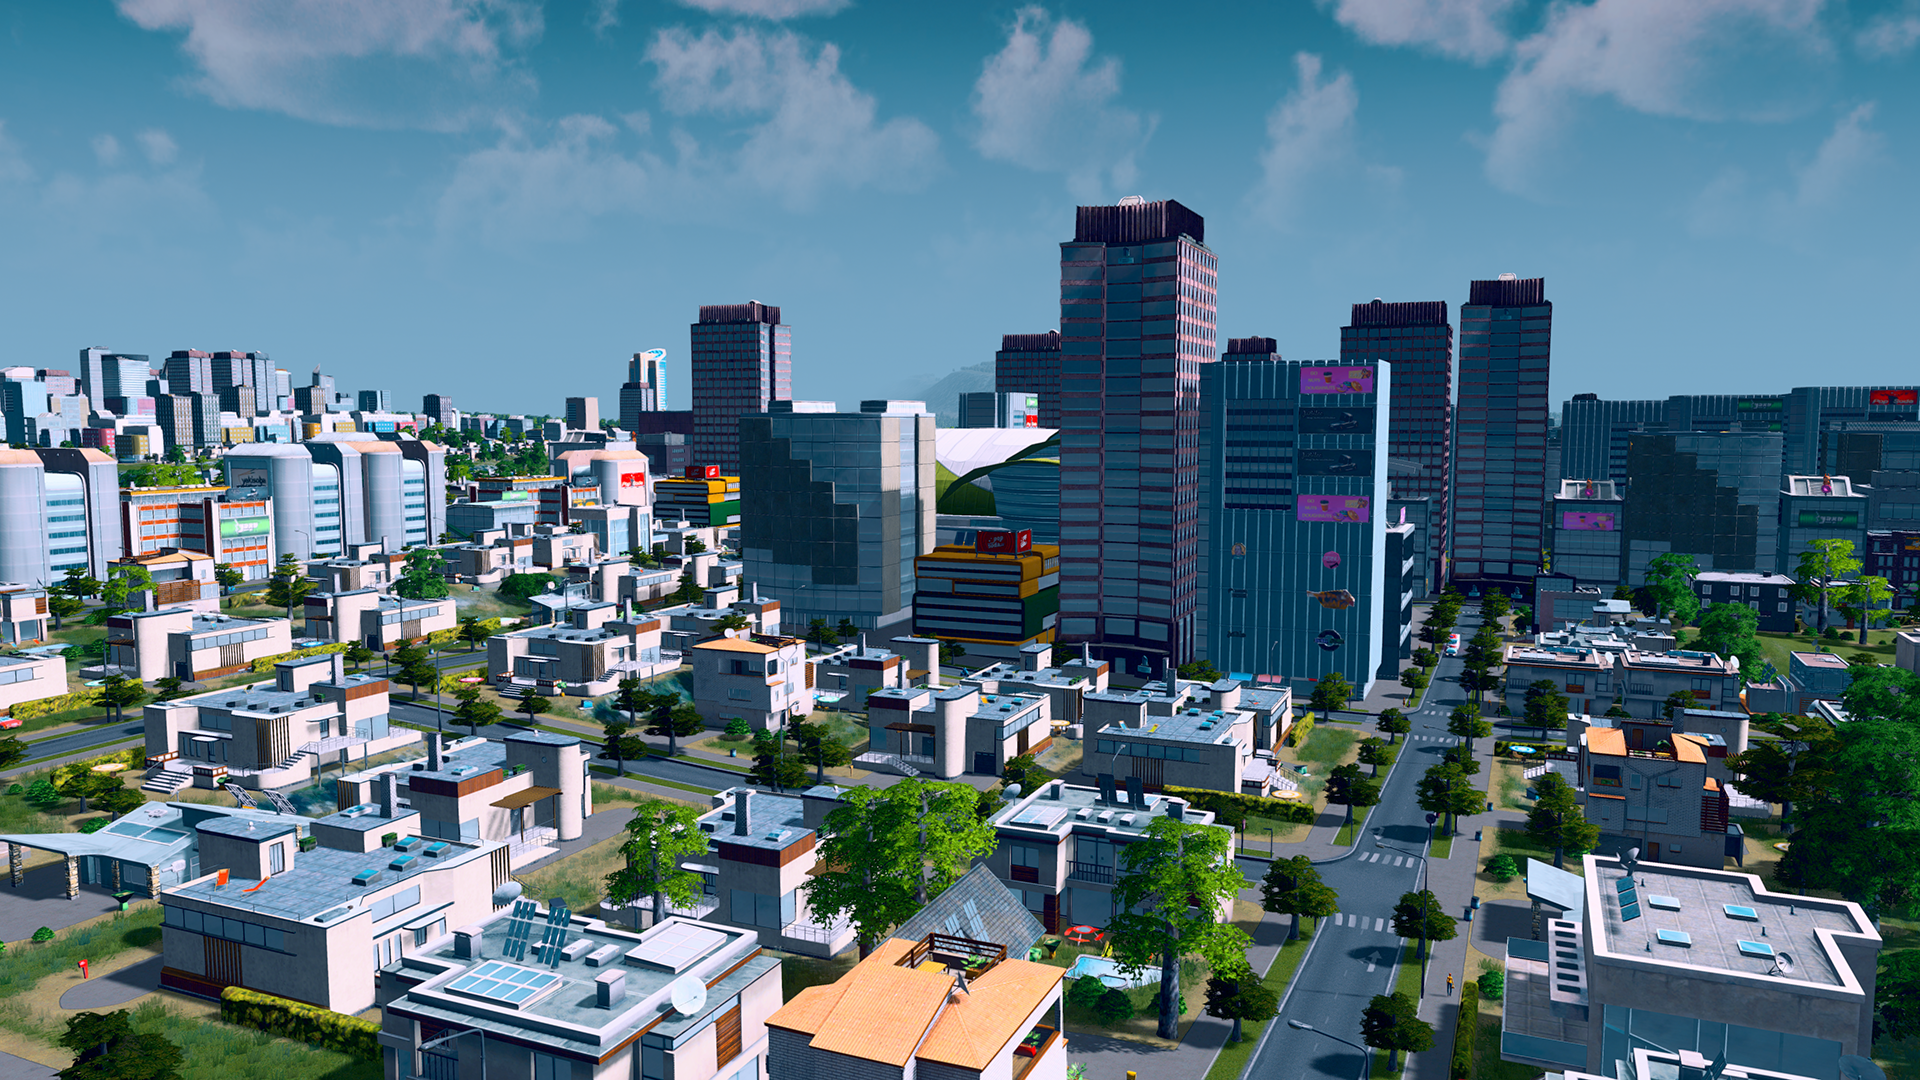 Cities: Skylines II - Jogo completo - Aluguel